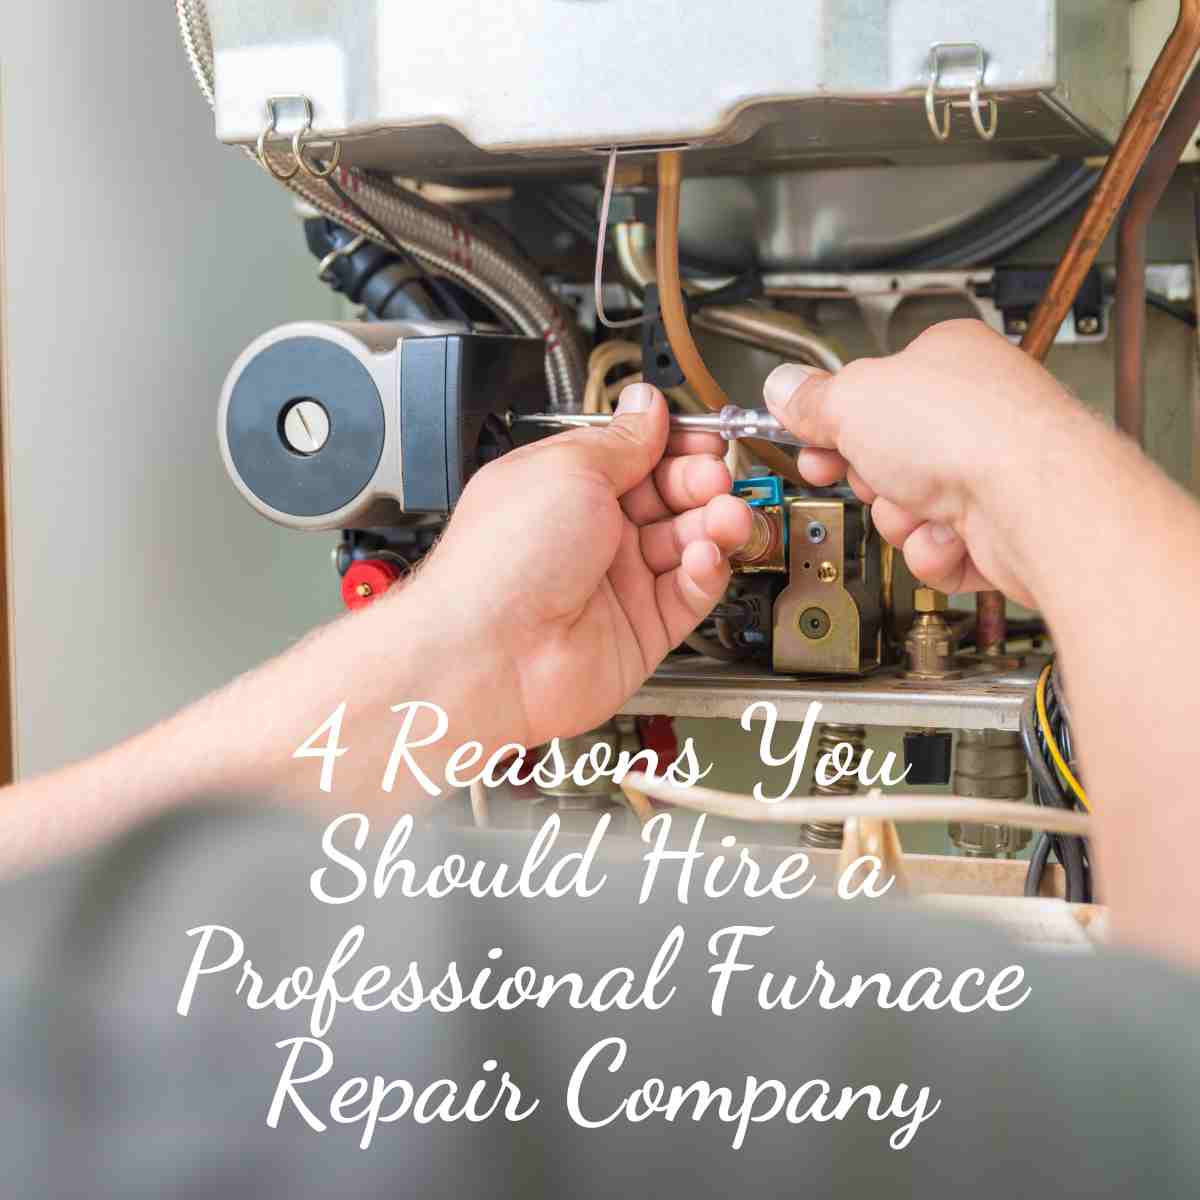 Hire a Professional Furnace Repair Company